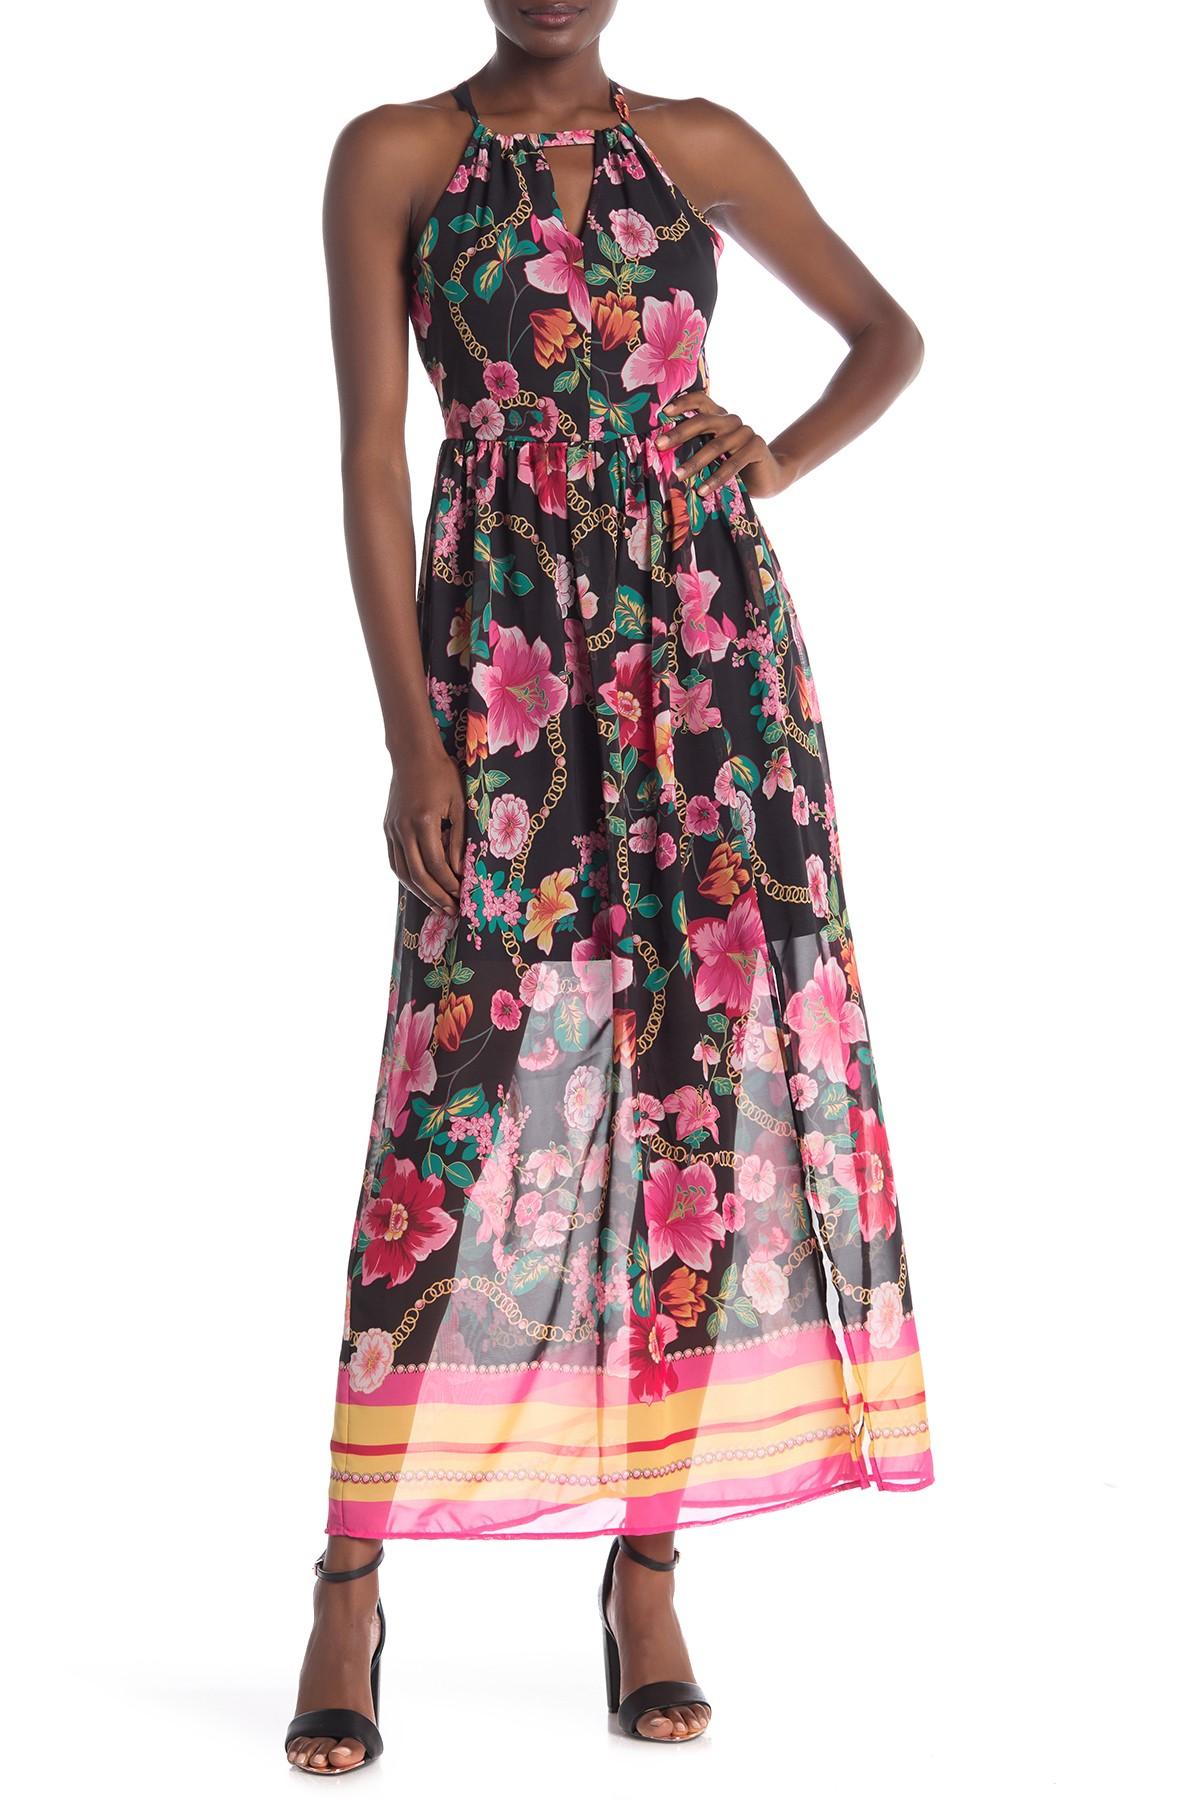 Nicole Miller Synthetic Sleeveless Keyhole Floral Print Maxi Dress - Lyst